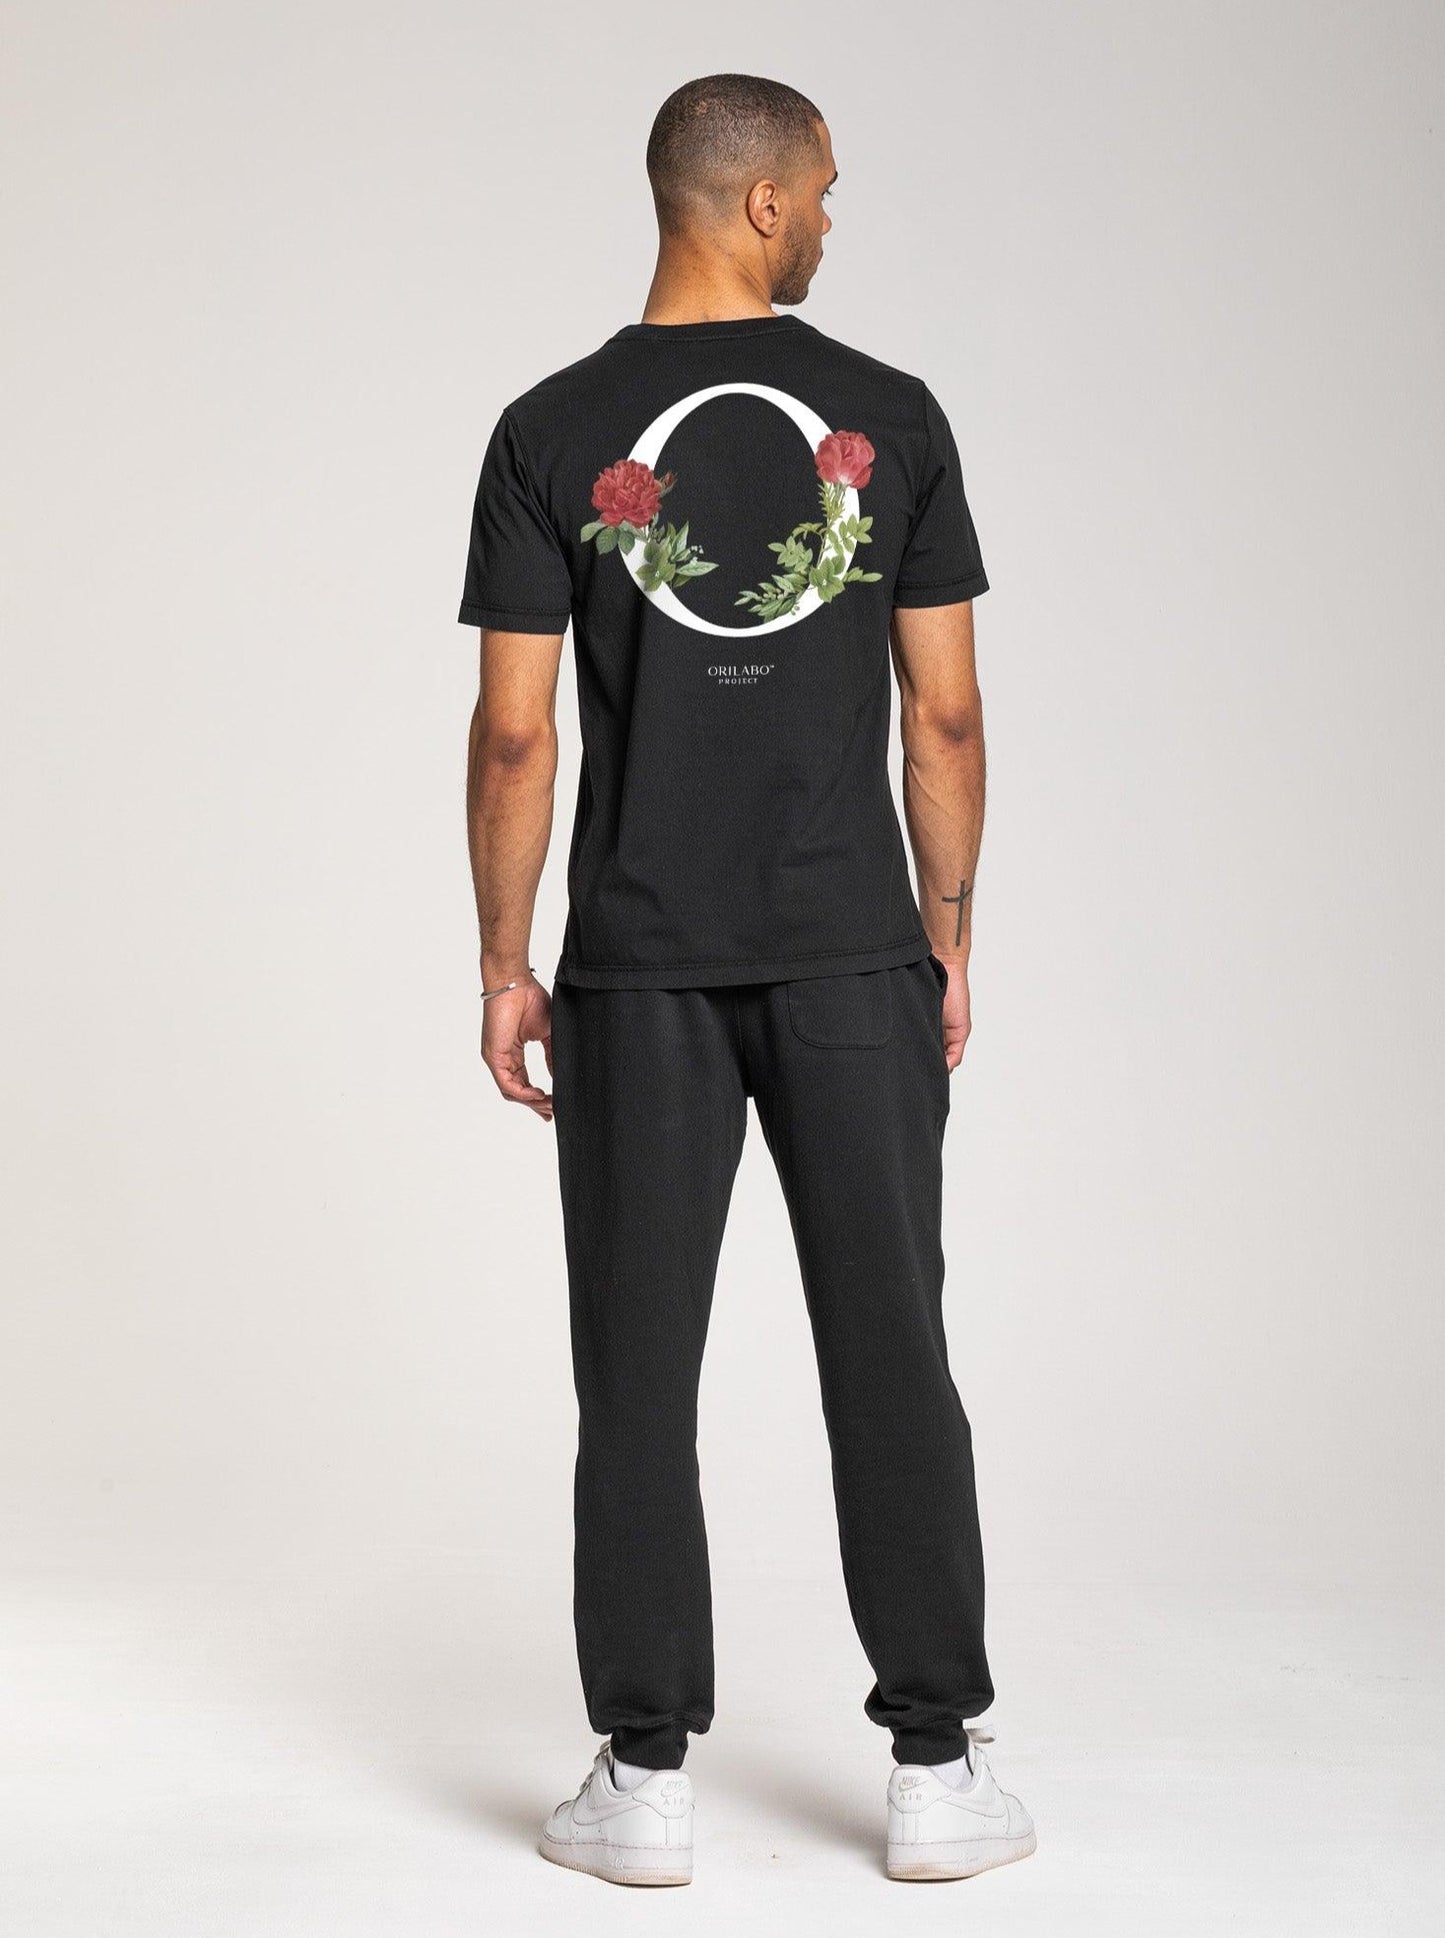 
                  
                    Men's O-Roses T-shirt - Black - ORILABO Project
                  
                